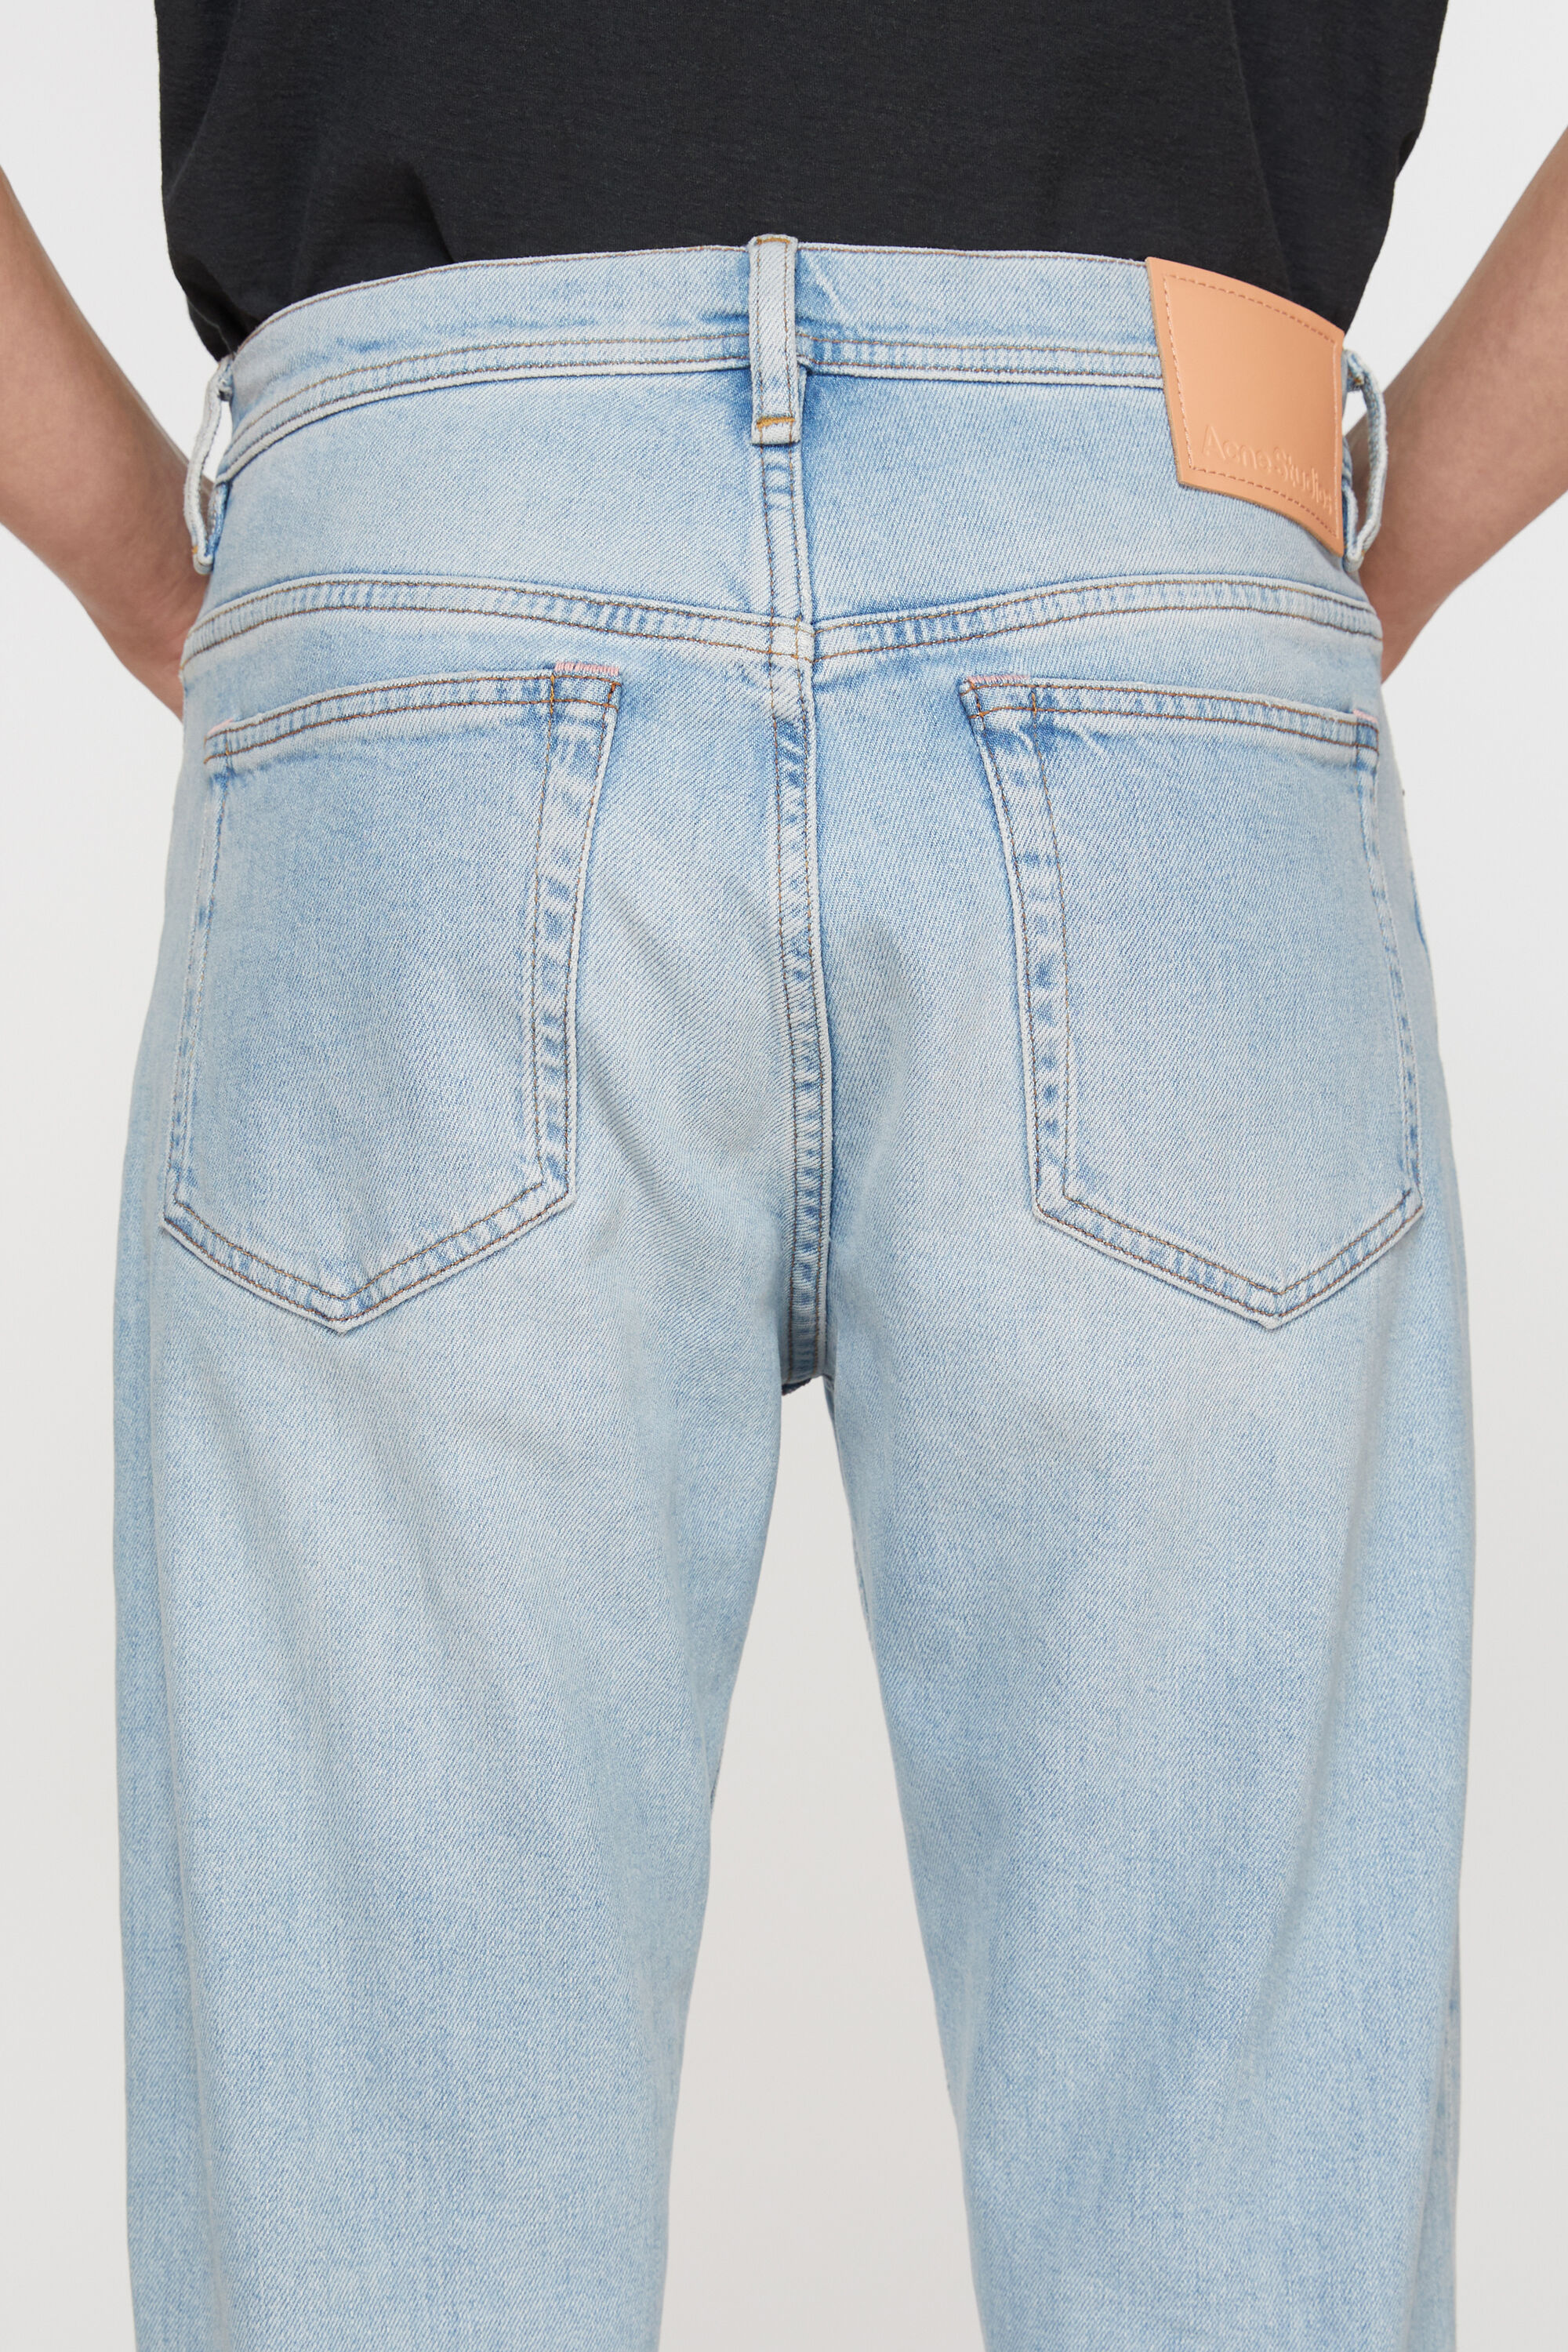 KaLI_store Jeans for Men Men's Slim Fit Stretch Jeans Ripped Skinny Jeans  for Men, Distressed Straight Leg Fashion Comfort Flex Waist Pants Light Blue,3XL  - Walmart.com